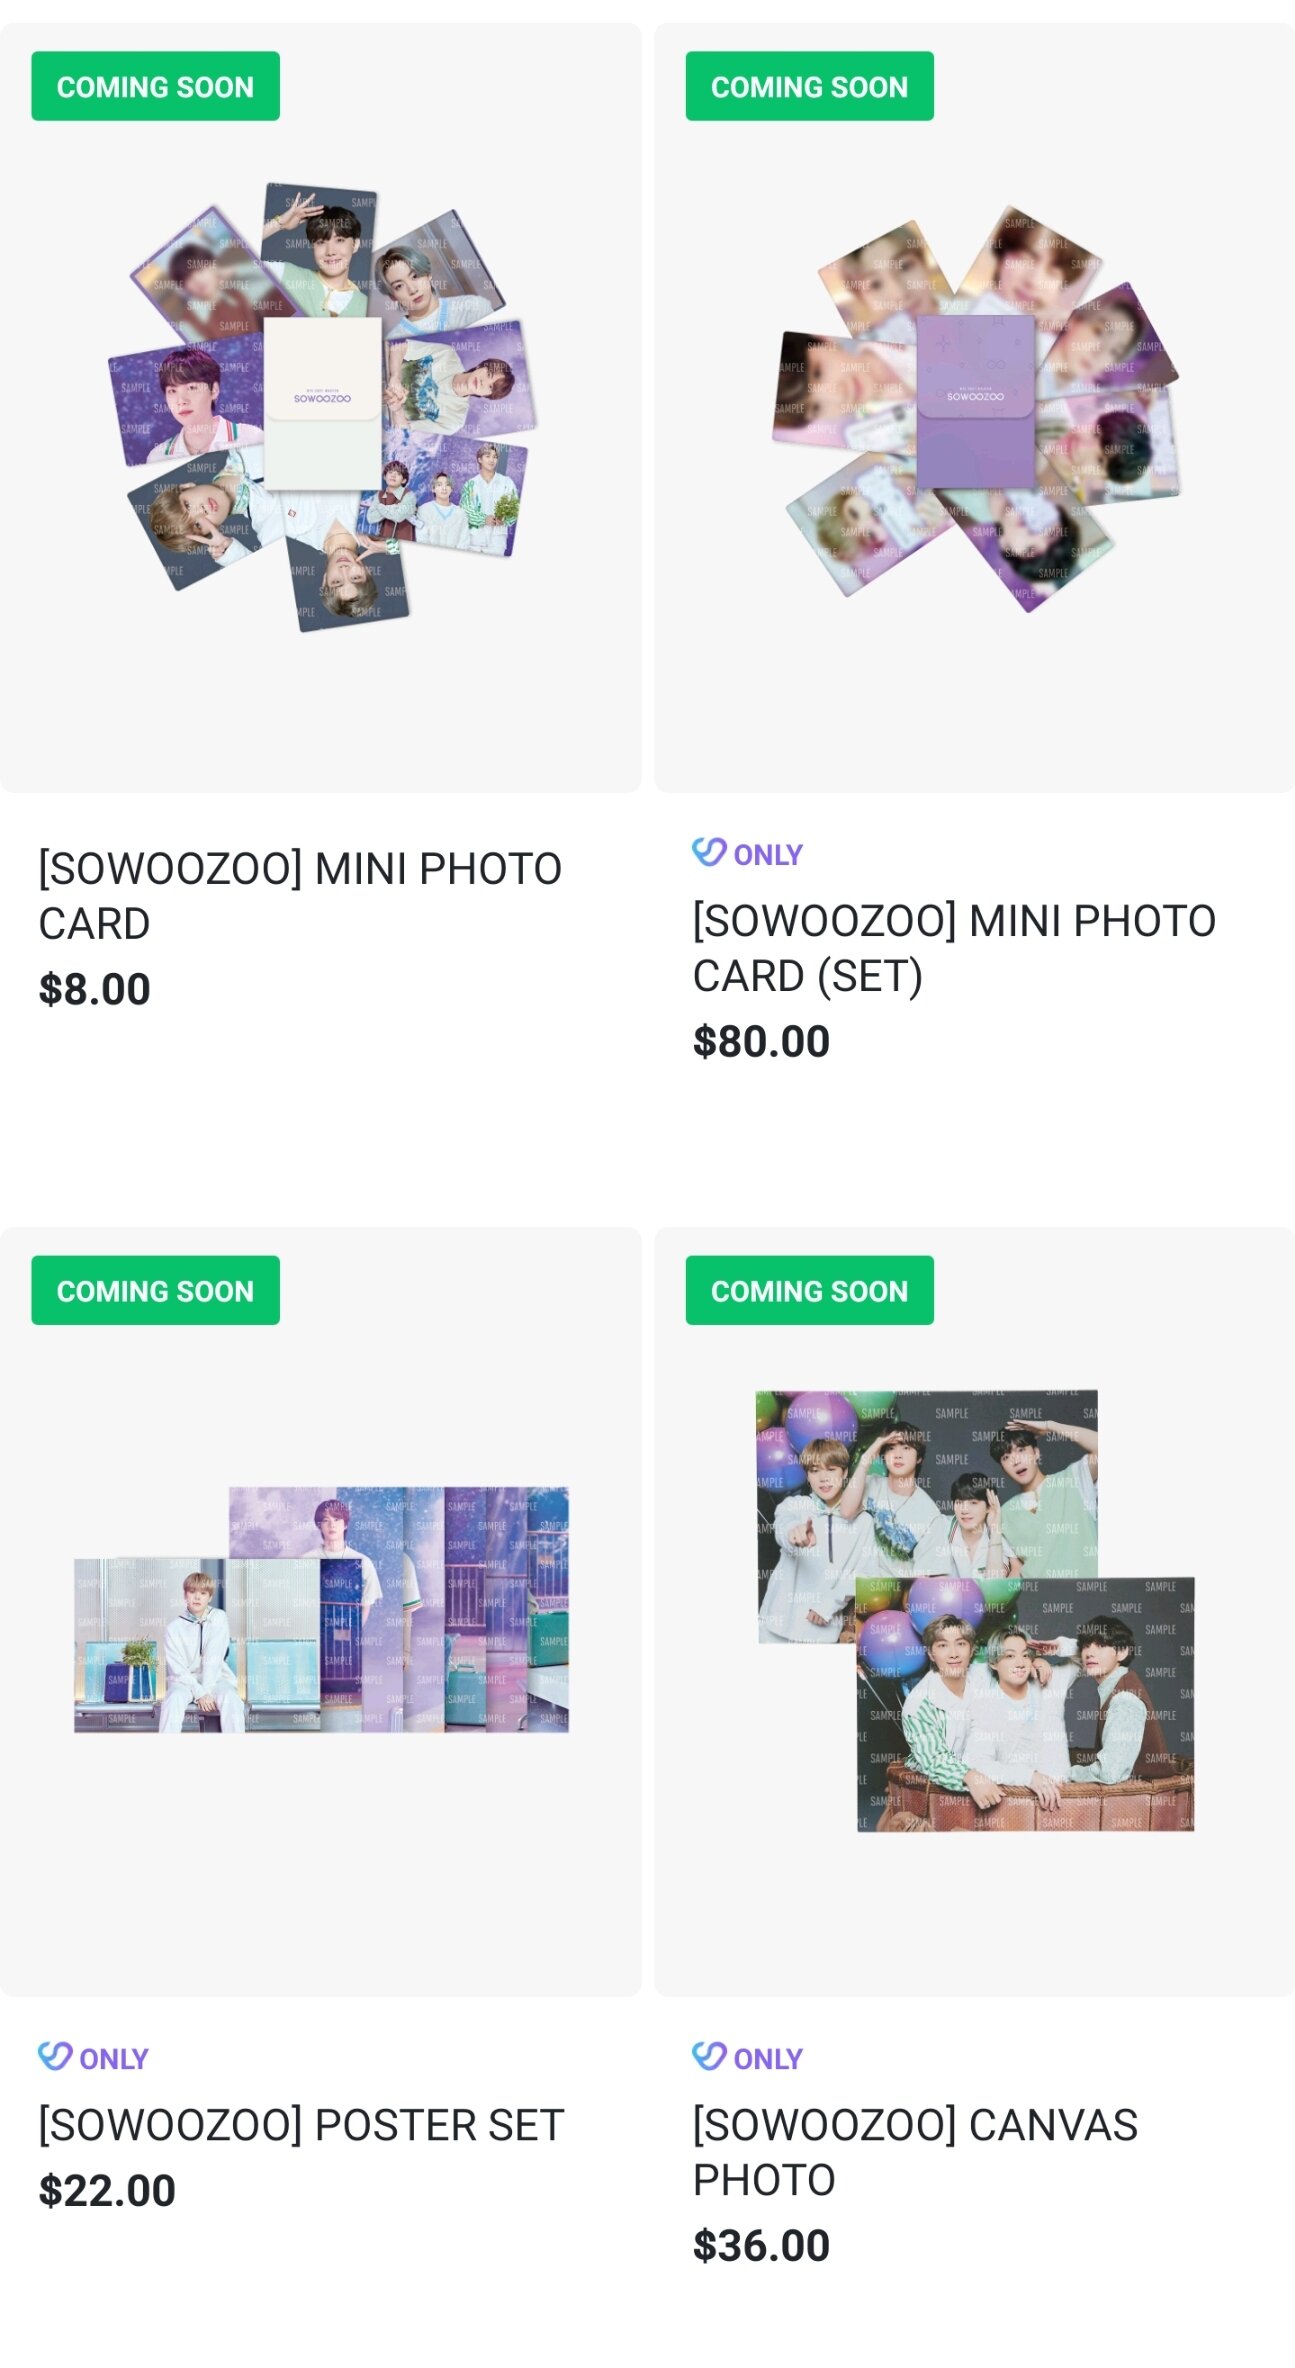 SOWOOZOO mini photo card, set, poster set, canvas photo